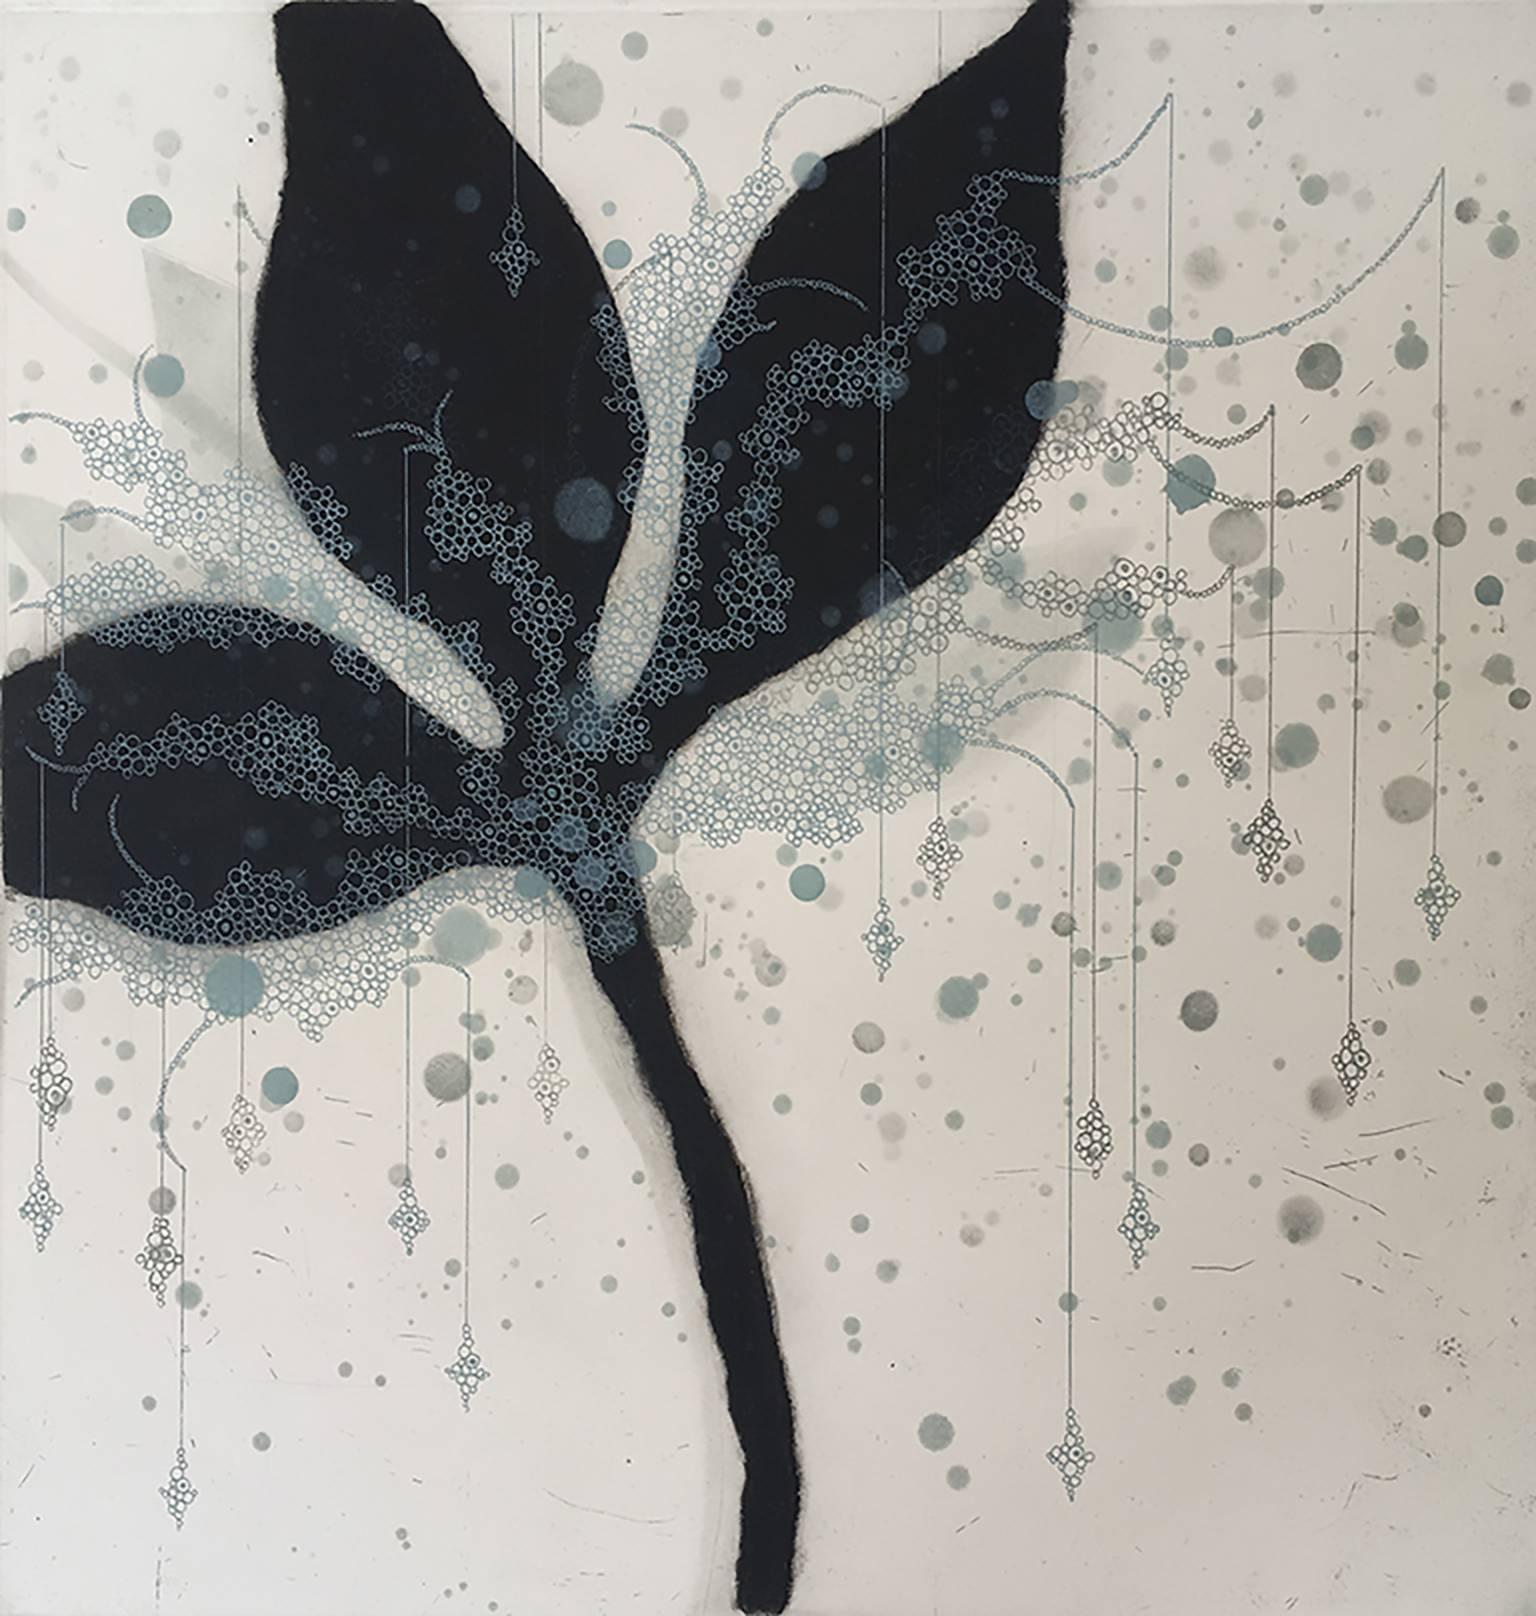 Seiko Tachibana Abstract Print - fern-15